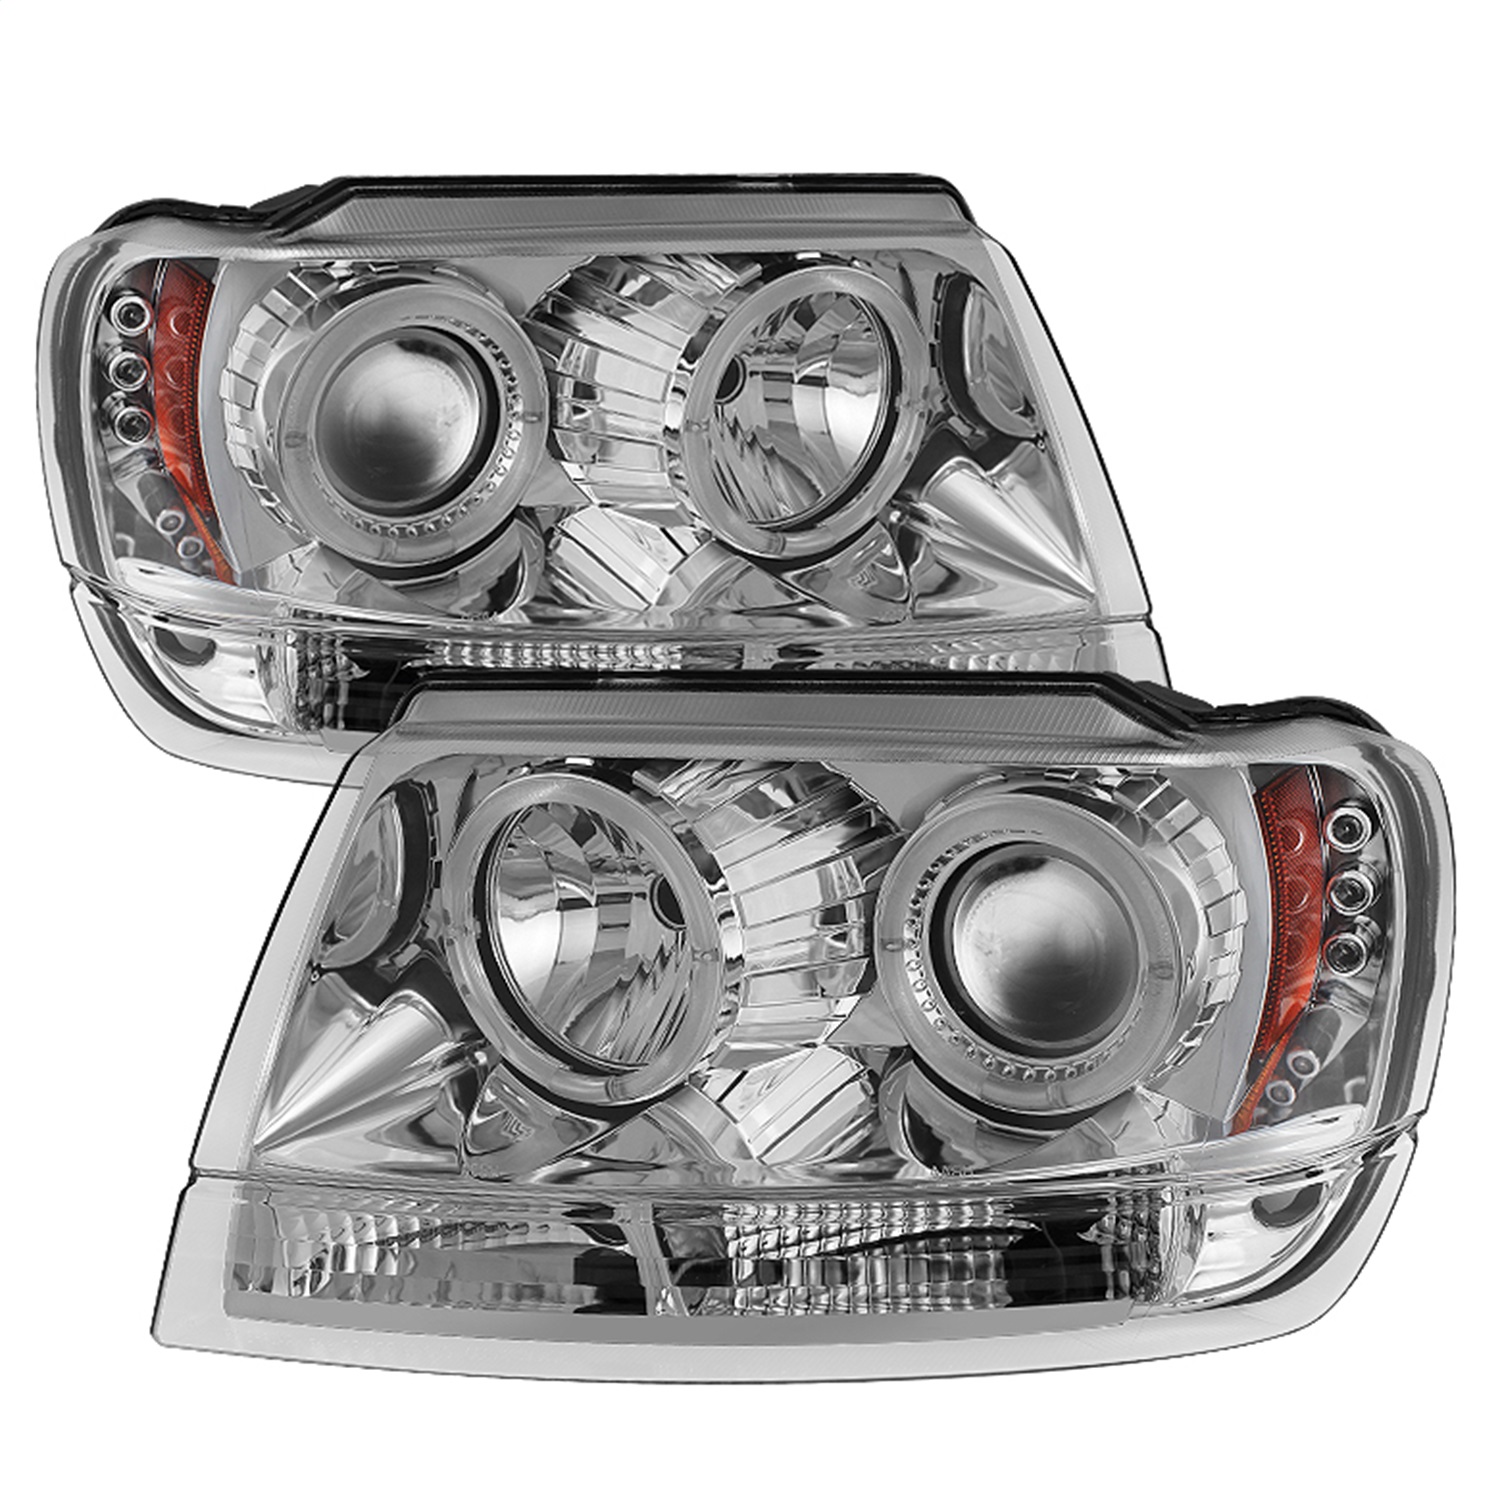 Spyder Auto 5011152 Halo LED Projector Headlights Fits 99-04 Grand Cherokee (WJ)